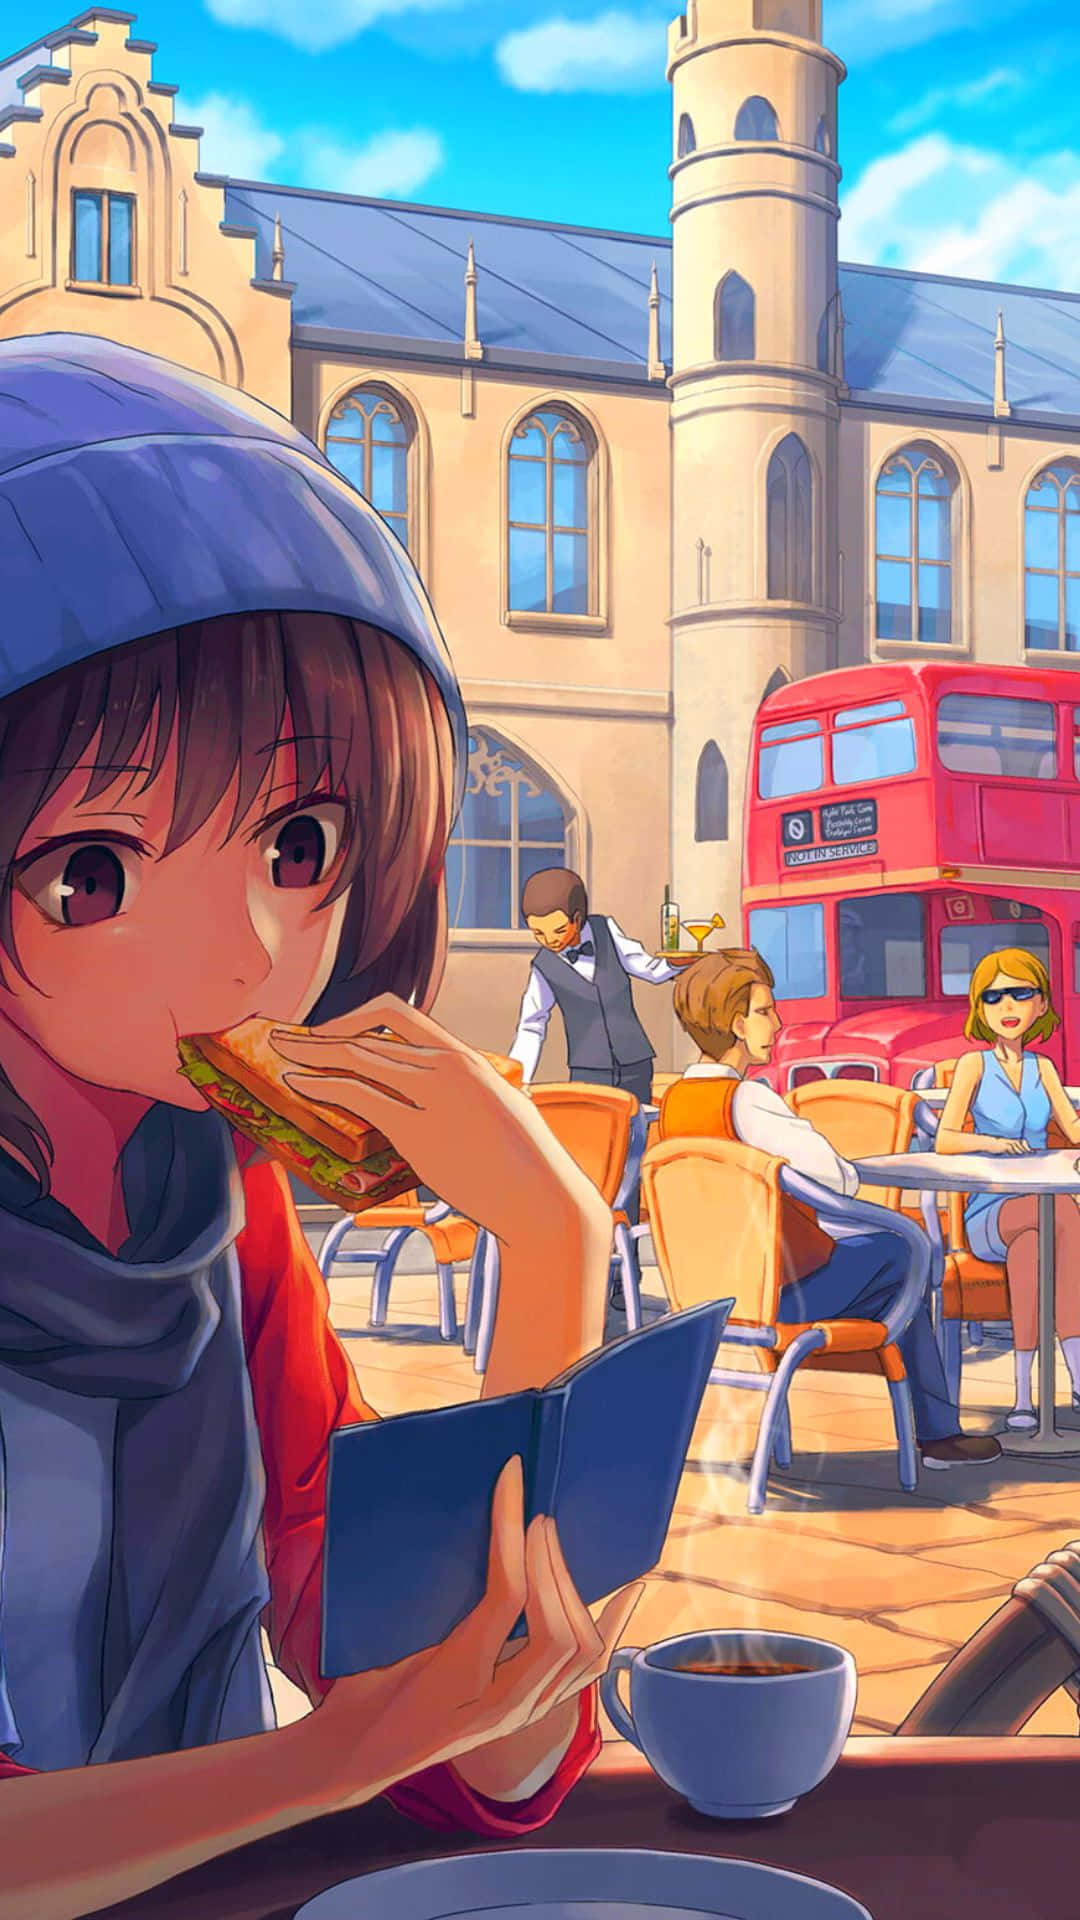 Anime Sandwich Cafe Background